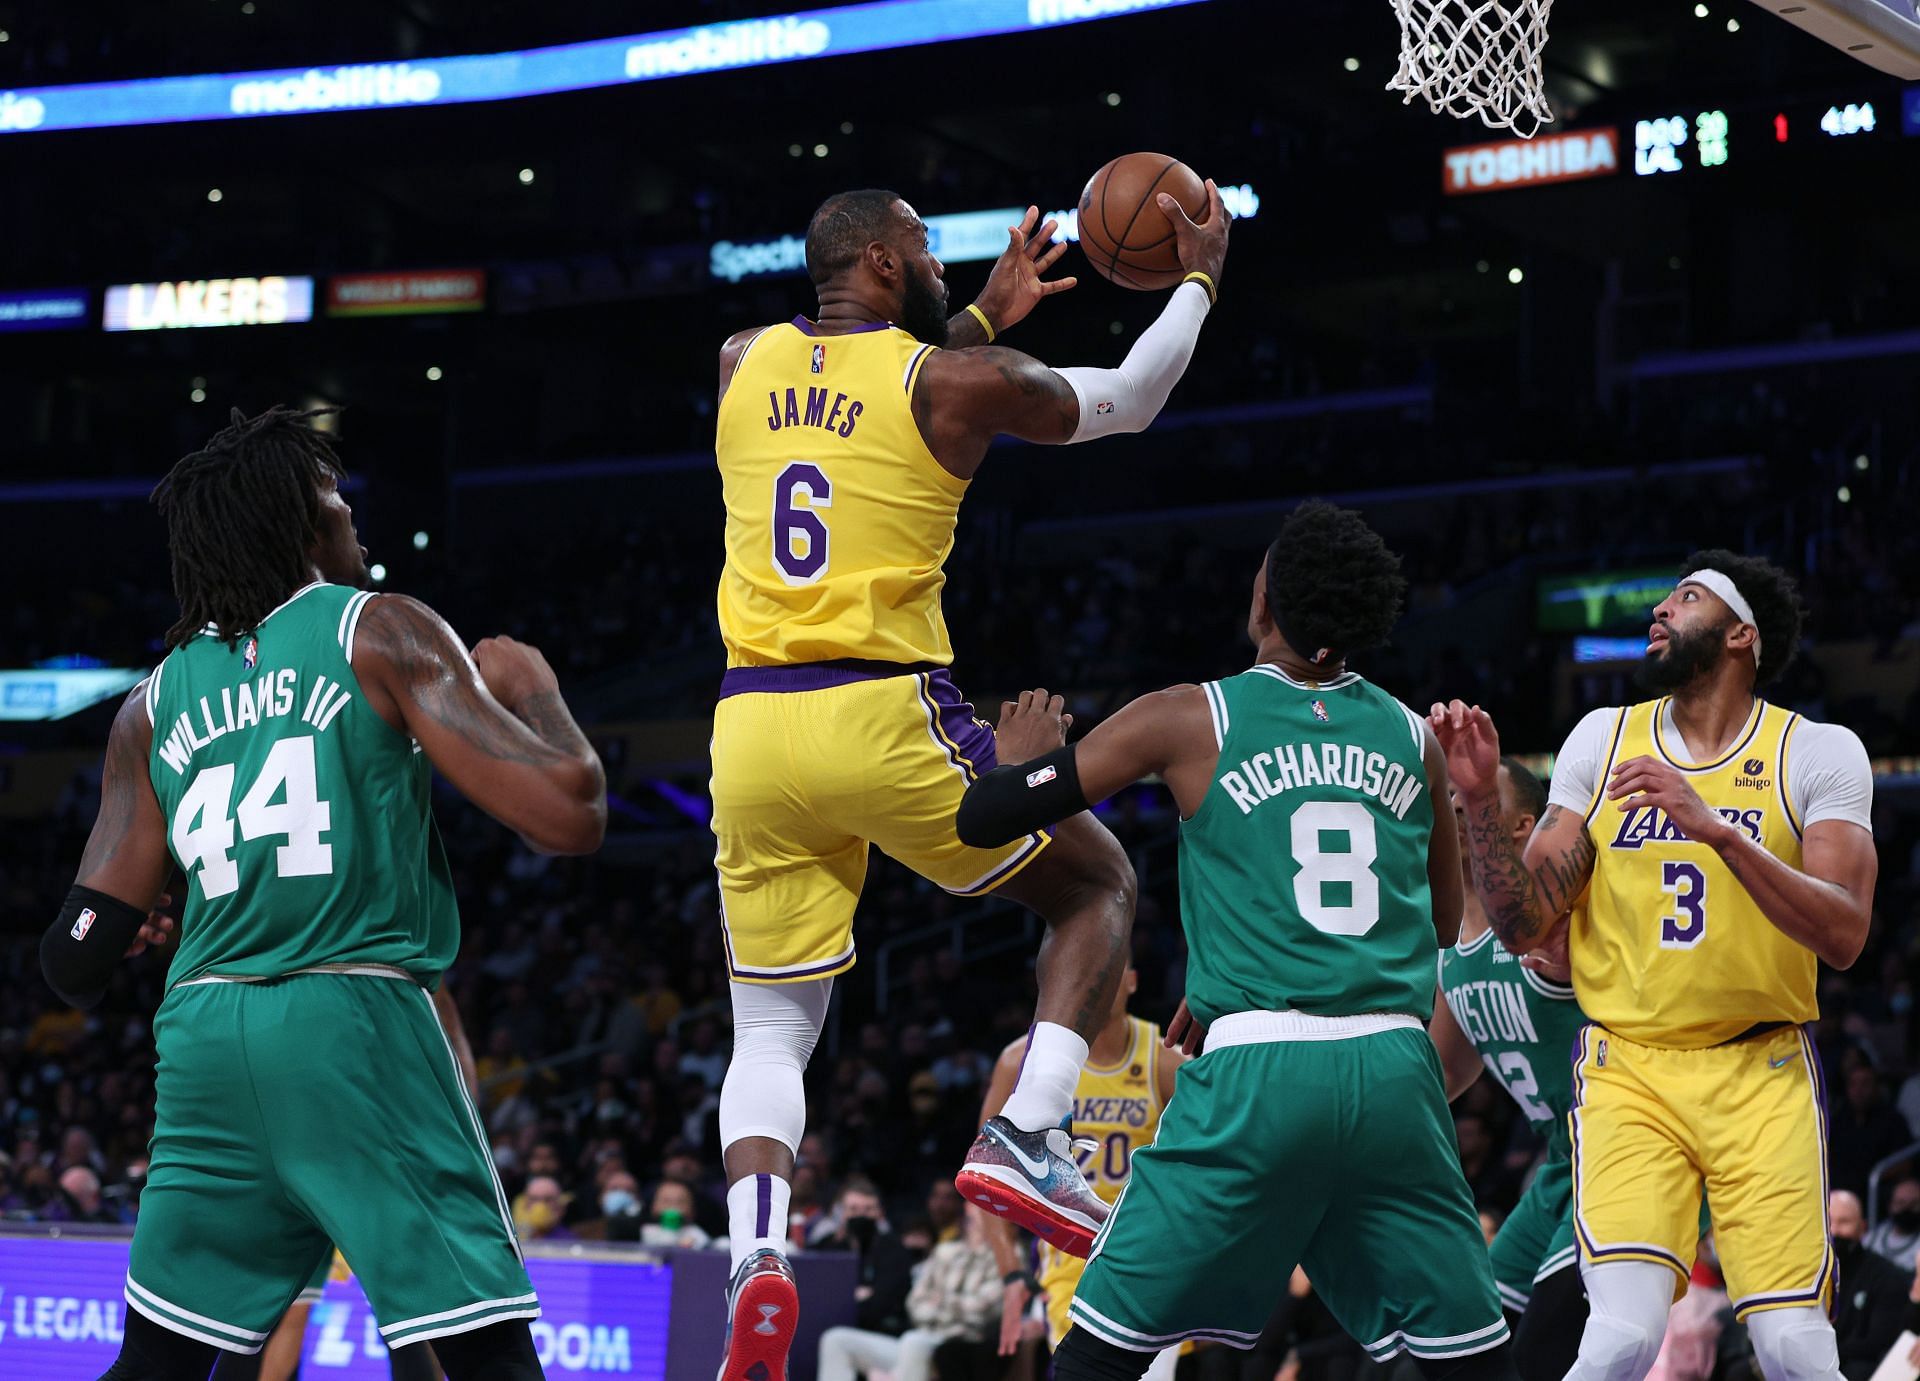 LeBron James attempts a layup at the Boston Celtics vs LA Lakers game